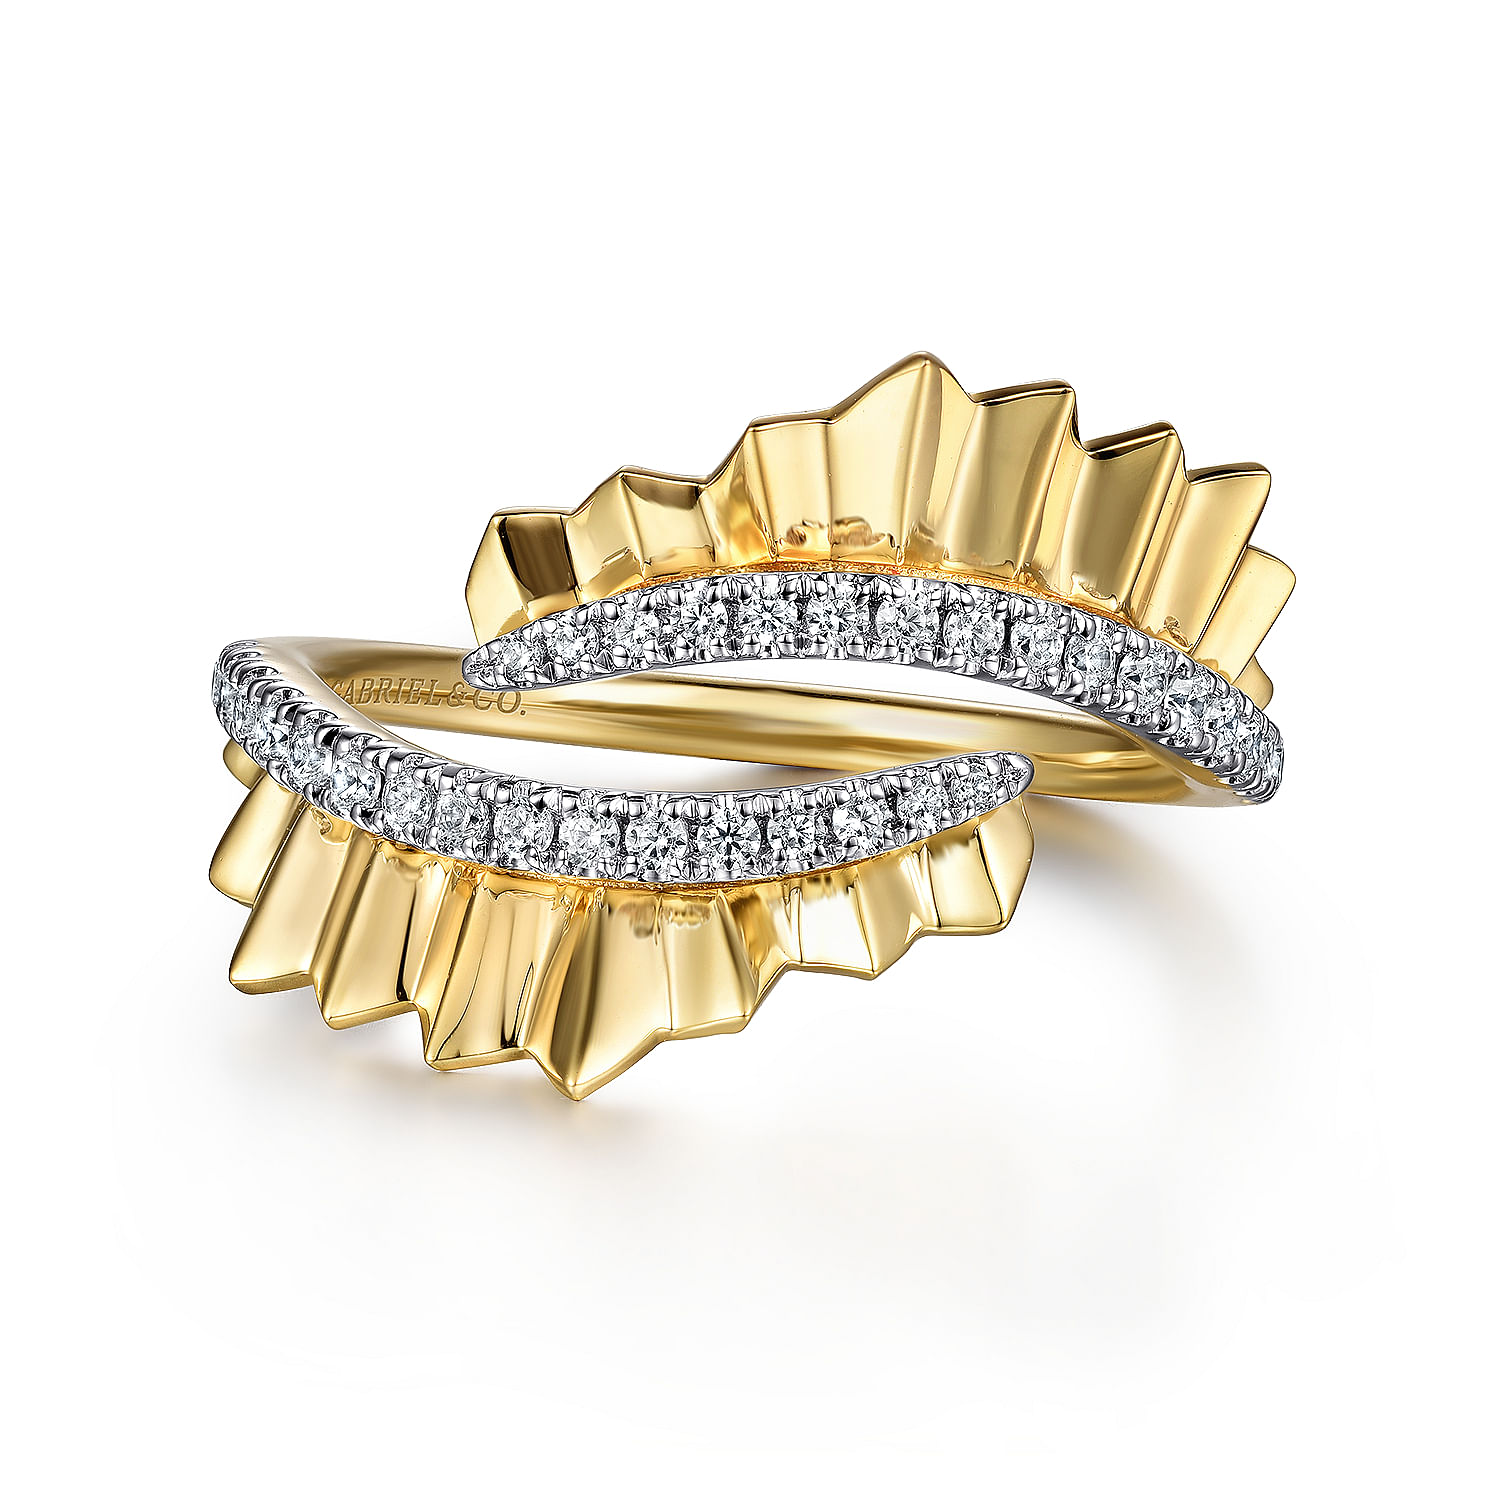 14K Yellow Gold Diamond Bypass Ring with Diamond Cut Texture